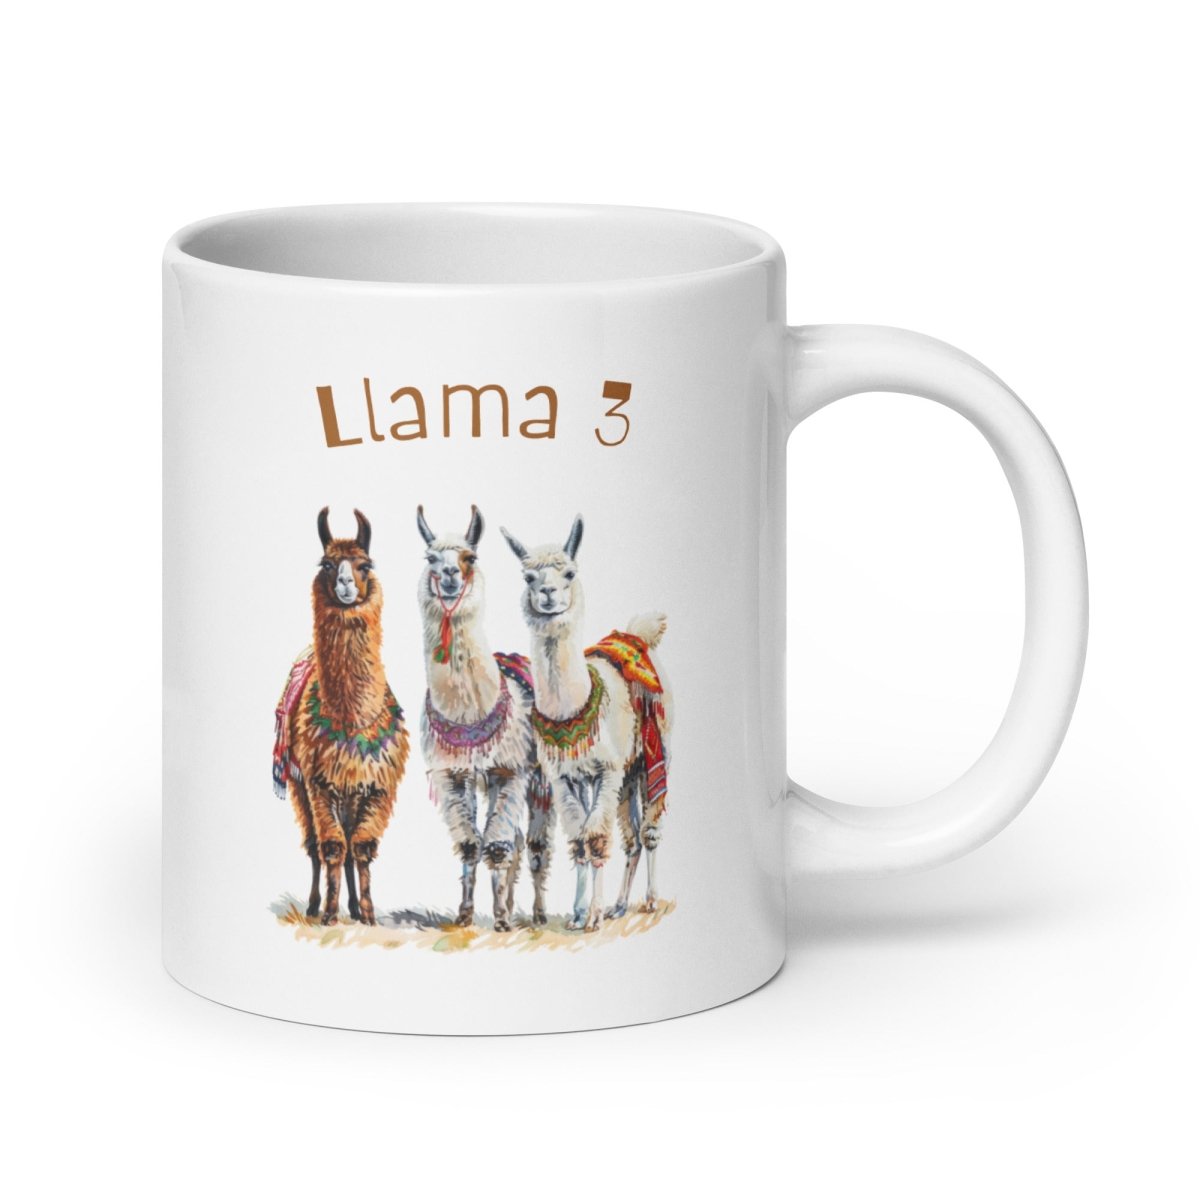 3 Llama 3 Llamas White Glossy Mug - AI Store